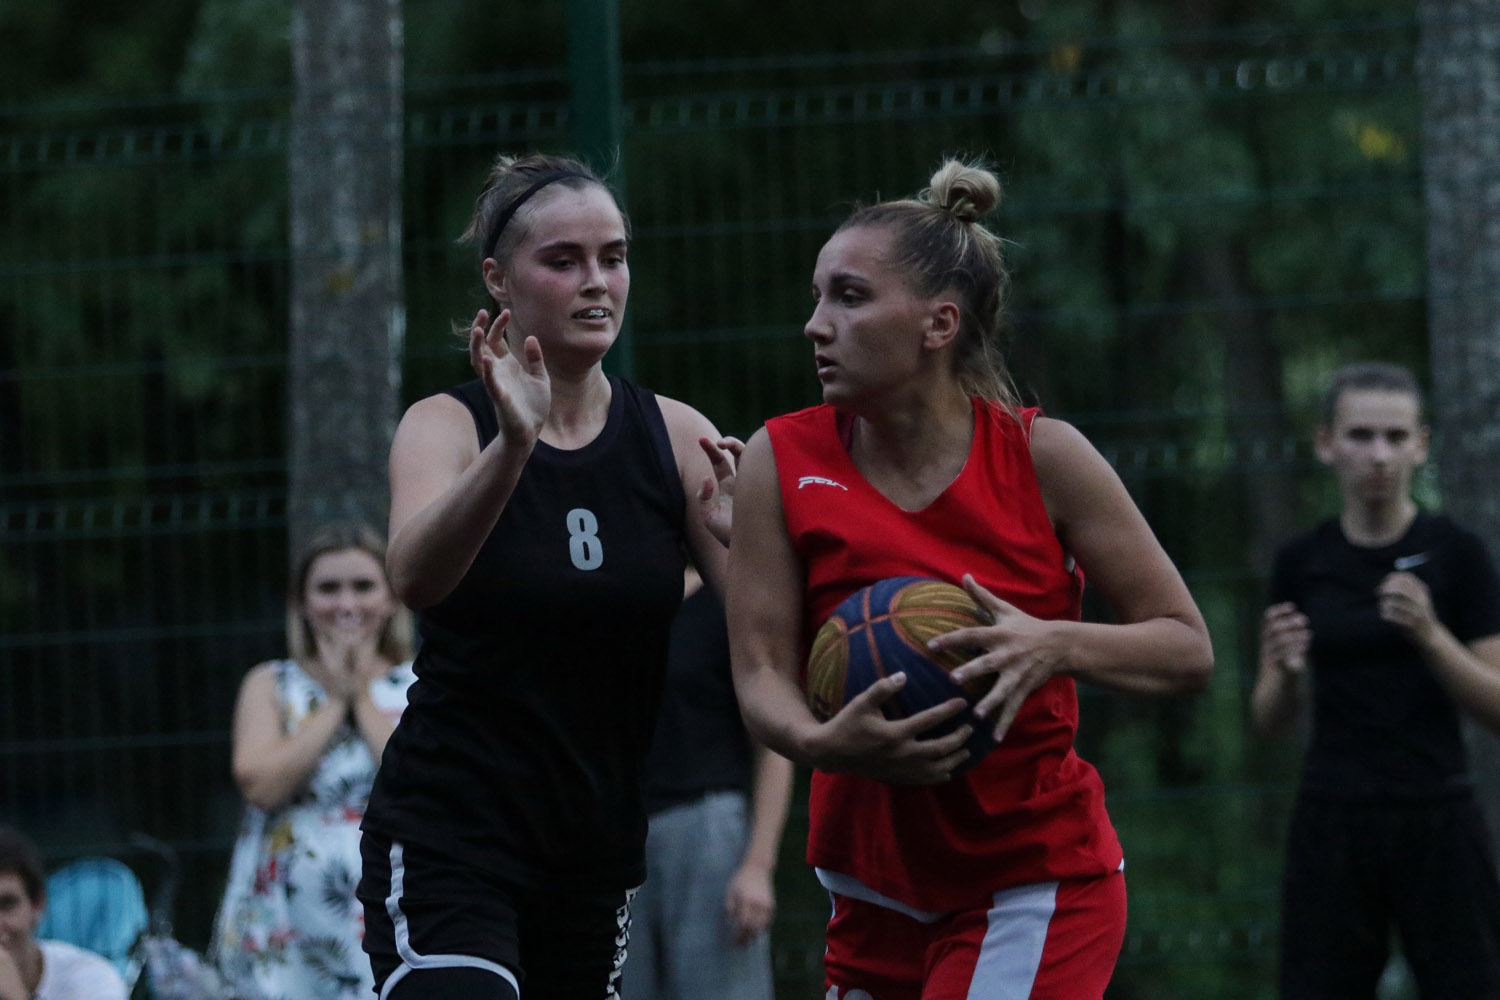 27 августа женщины. Женская баскетбольная команда Самара.